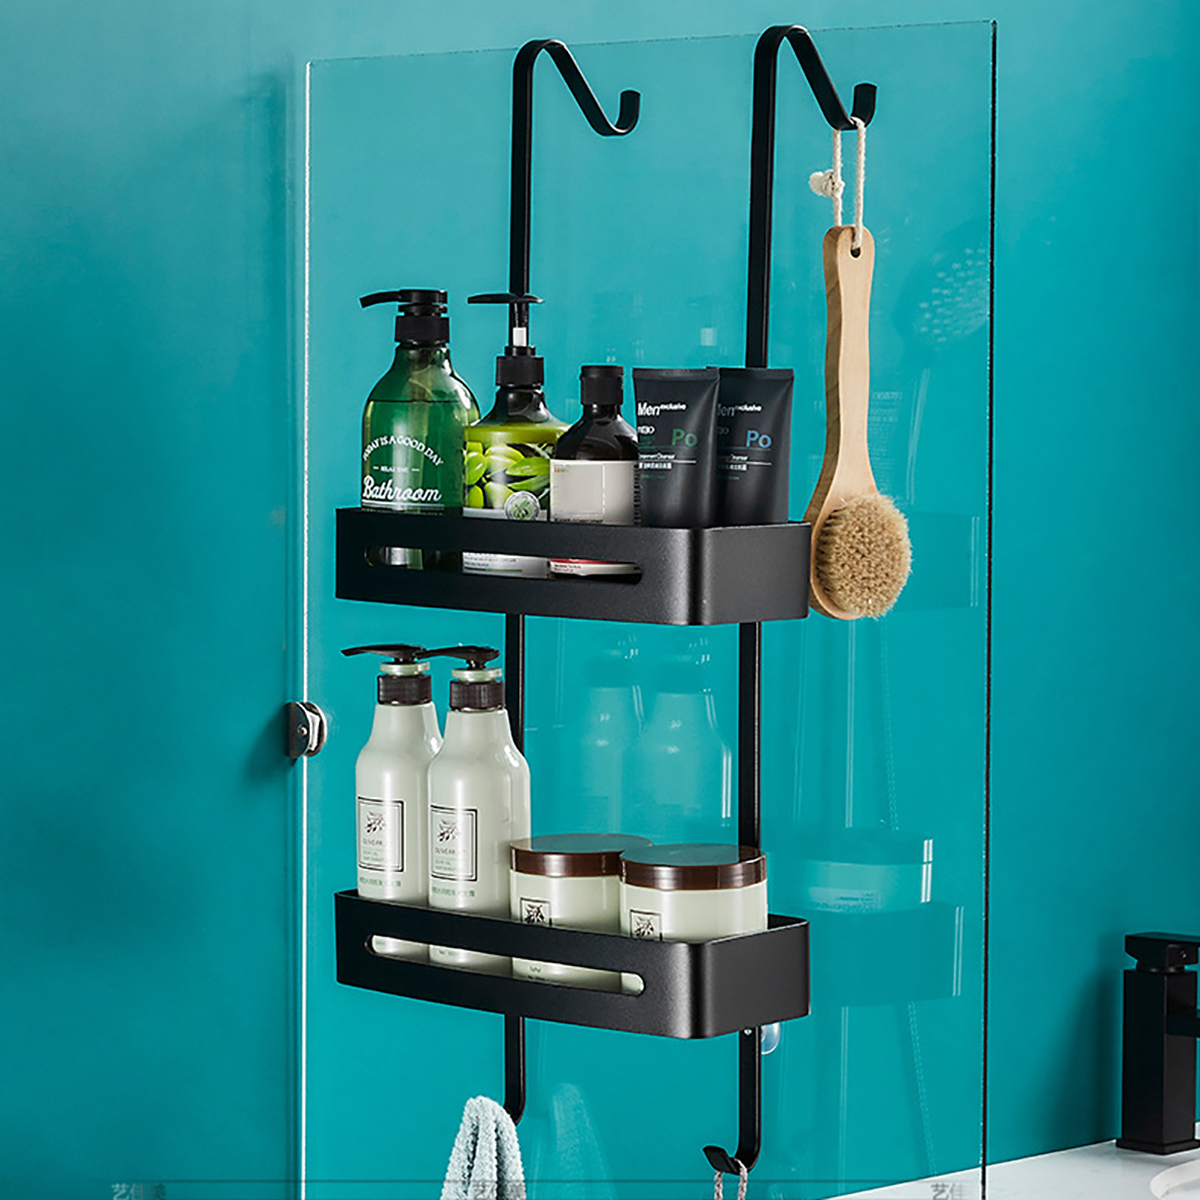 Find Black Hanging Bath Shelves Bathroom Shelf Organizer Nail free Shampoo Holder for Sale on Gipsybee.com with cryptocurrencies